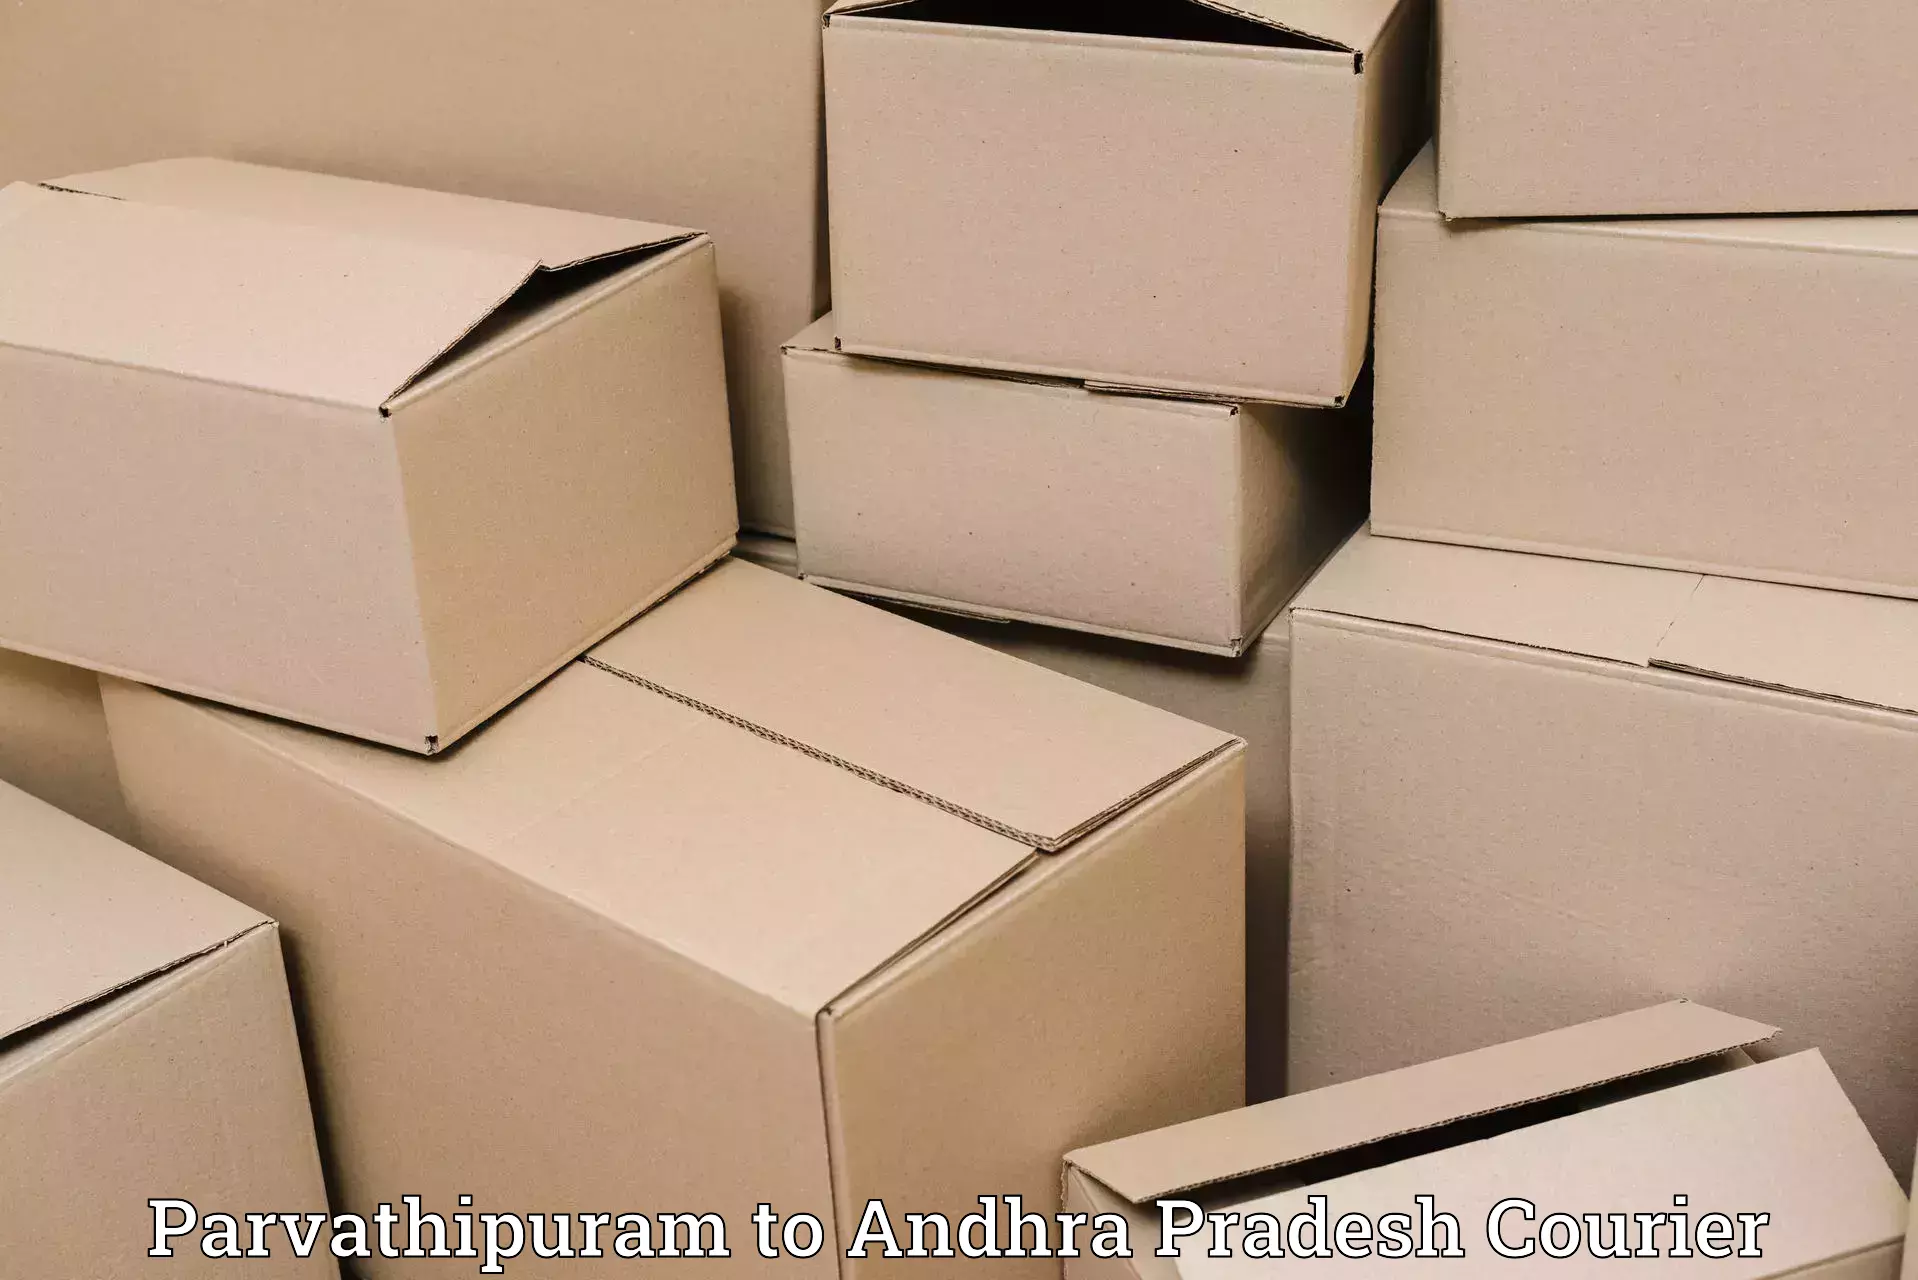 Digital shipping tools Parvathipuram to Visakhapatnam Port